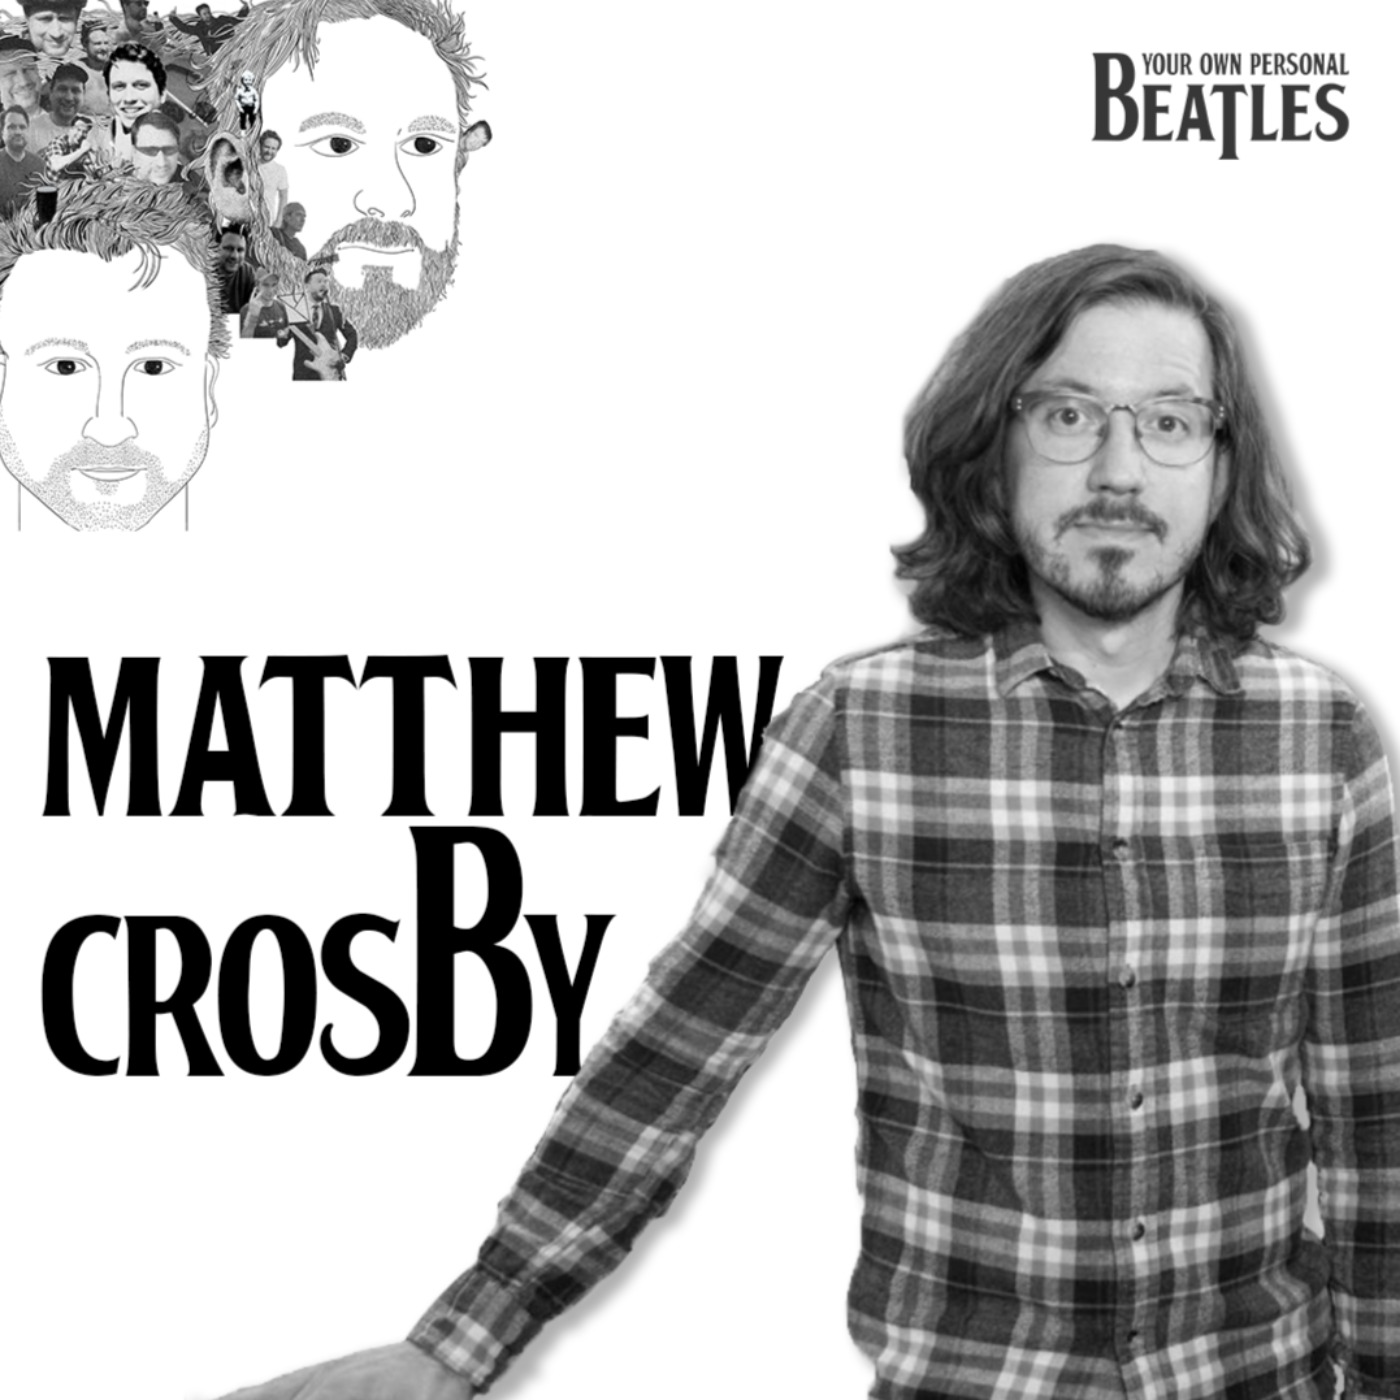 Matthew Crosby's Personal Beatles